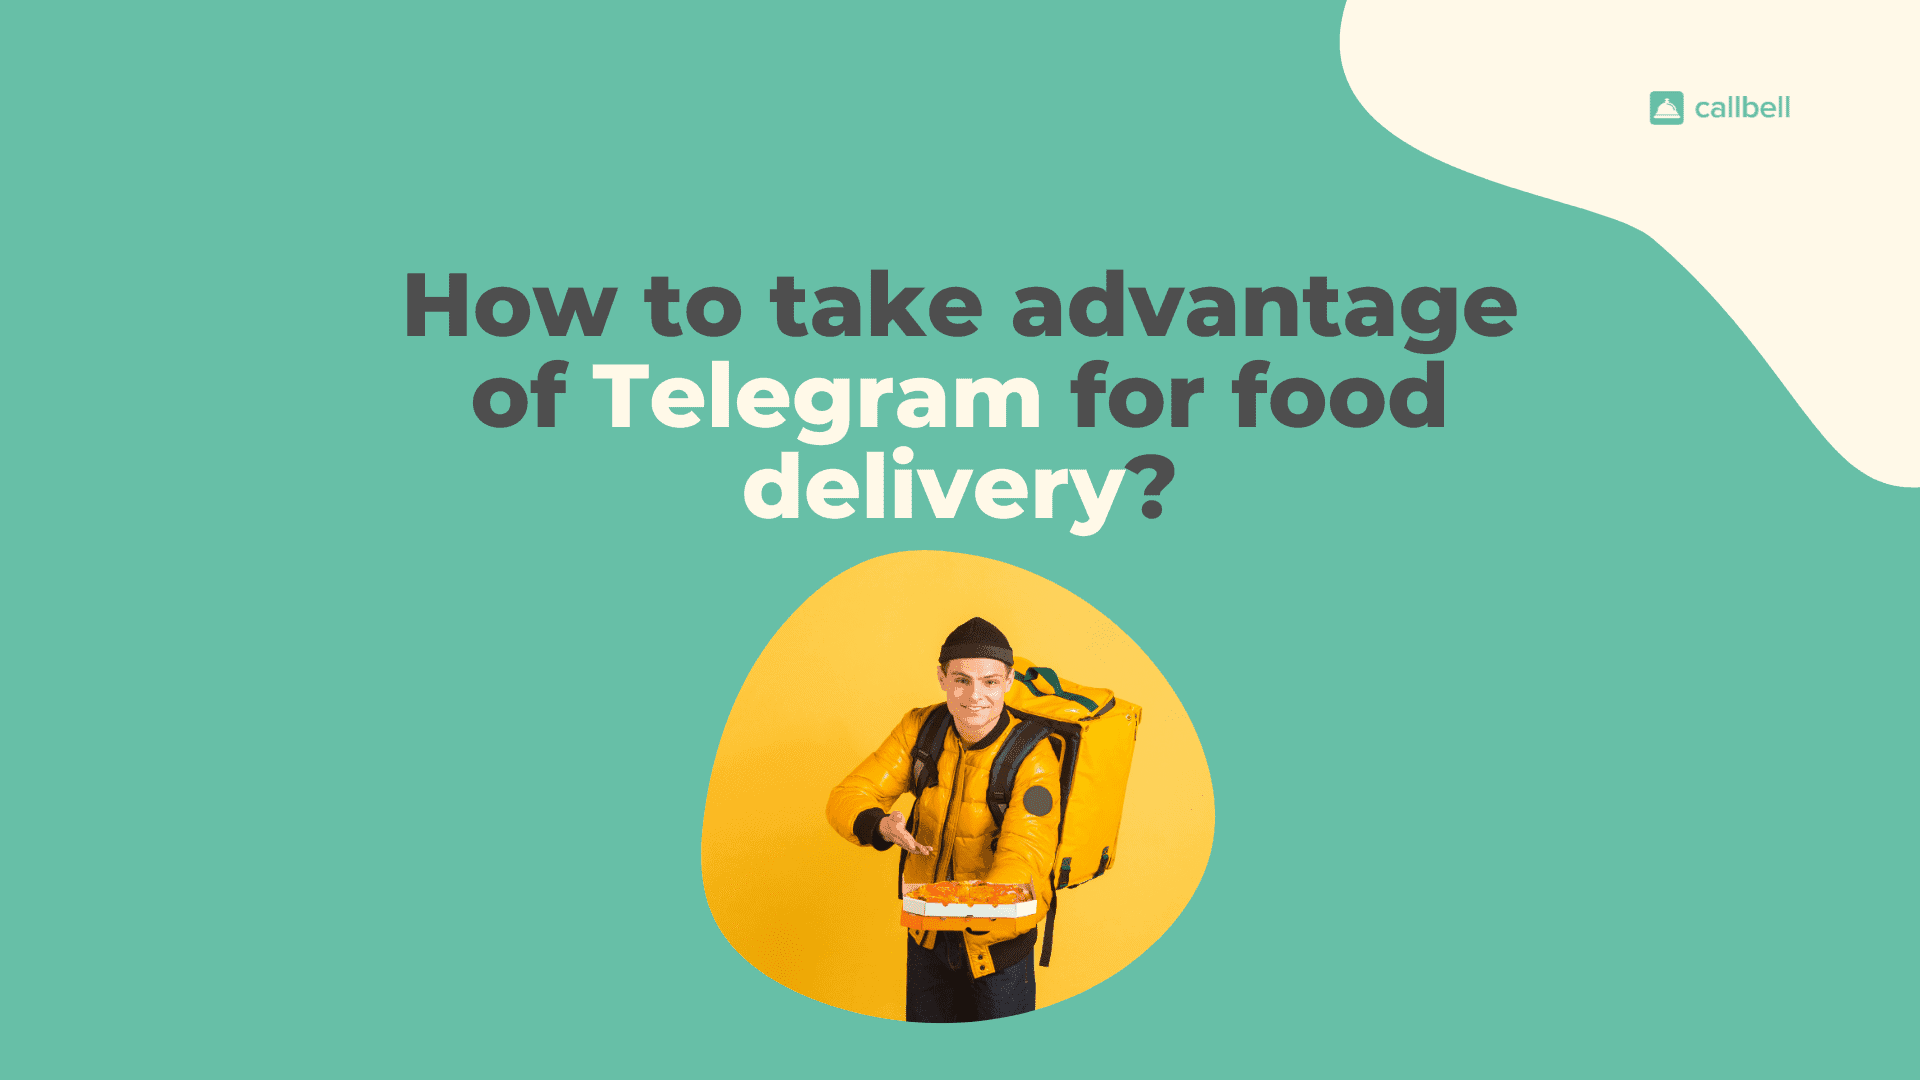 Telegram for delivery